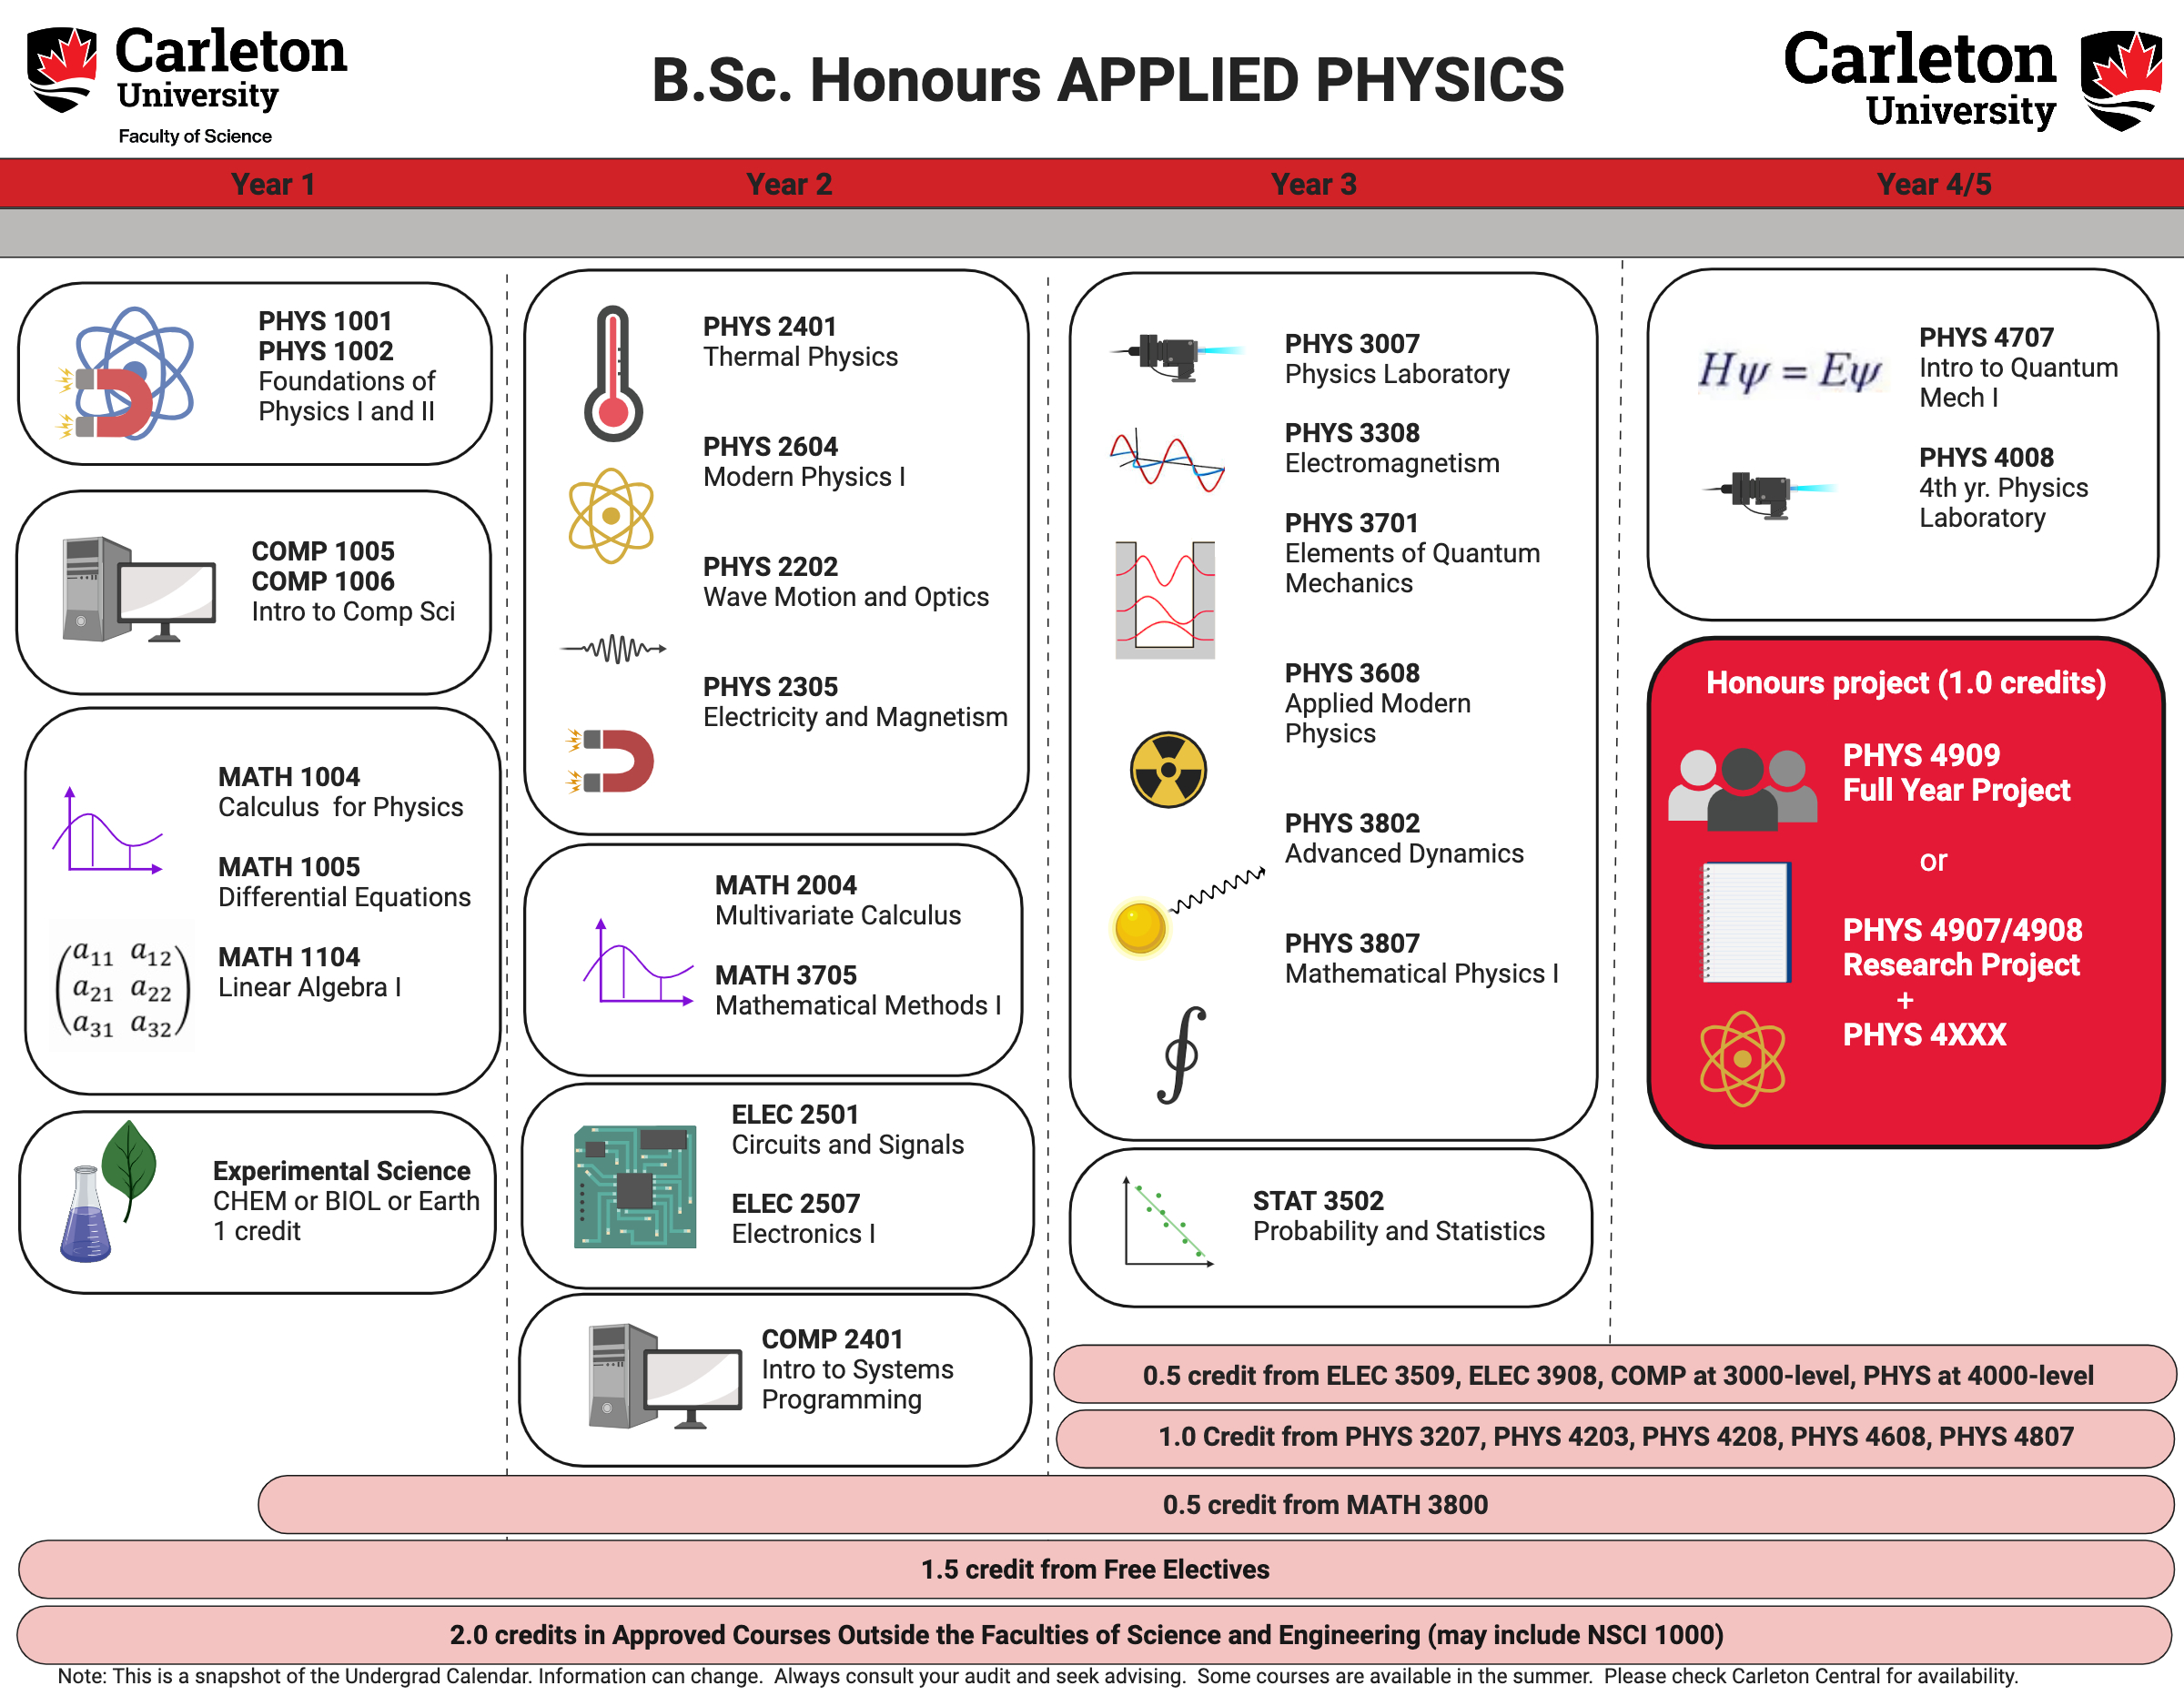 Applied Physics B.Sc. Course maps carleton